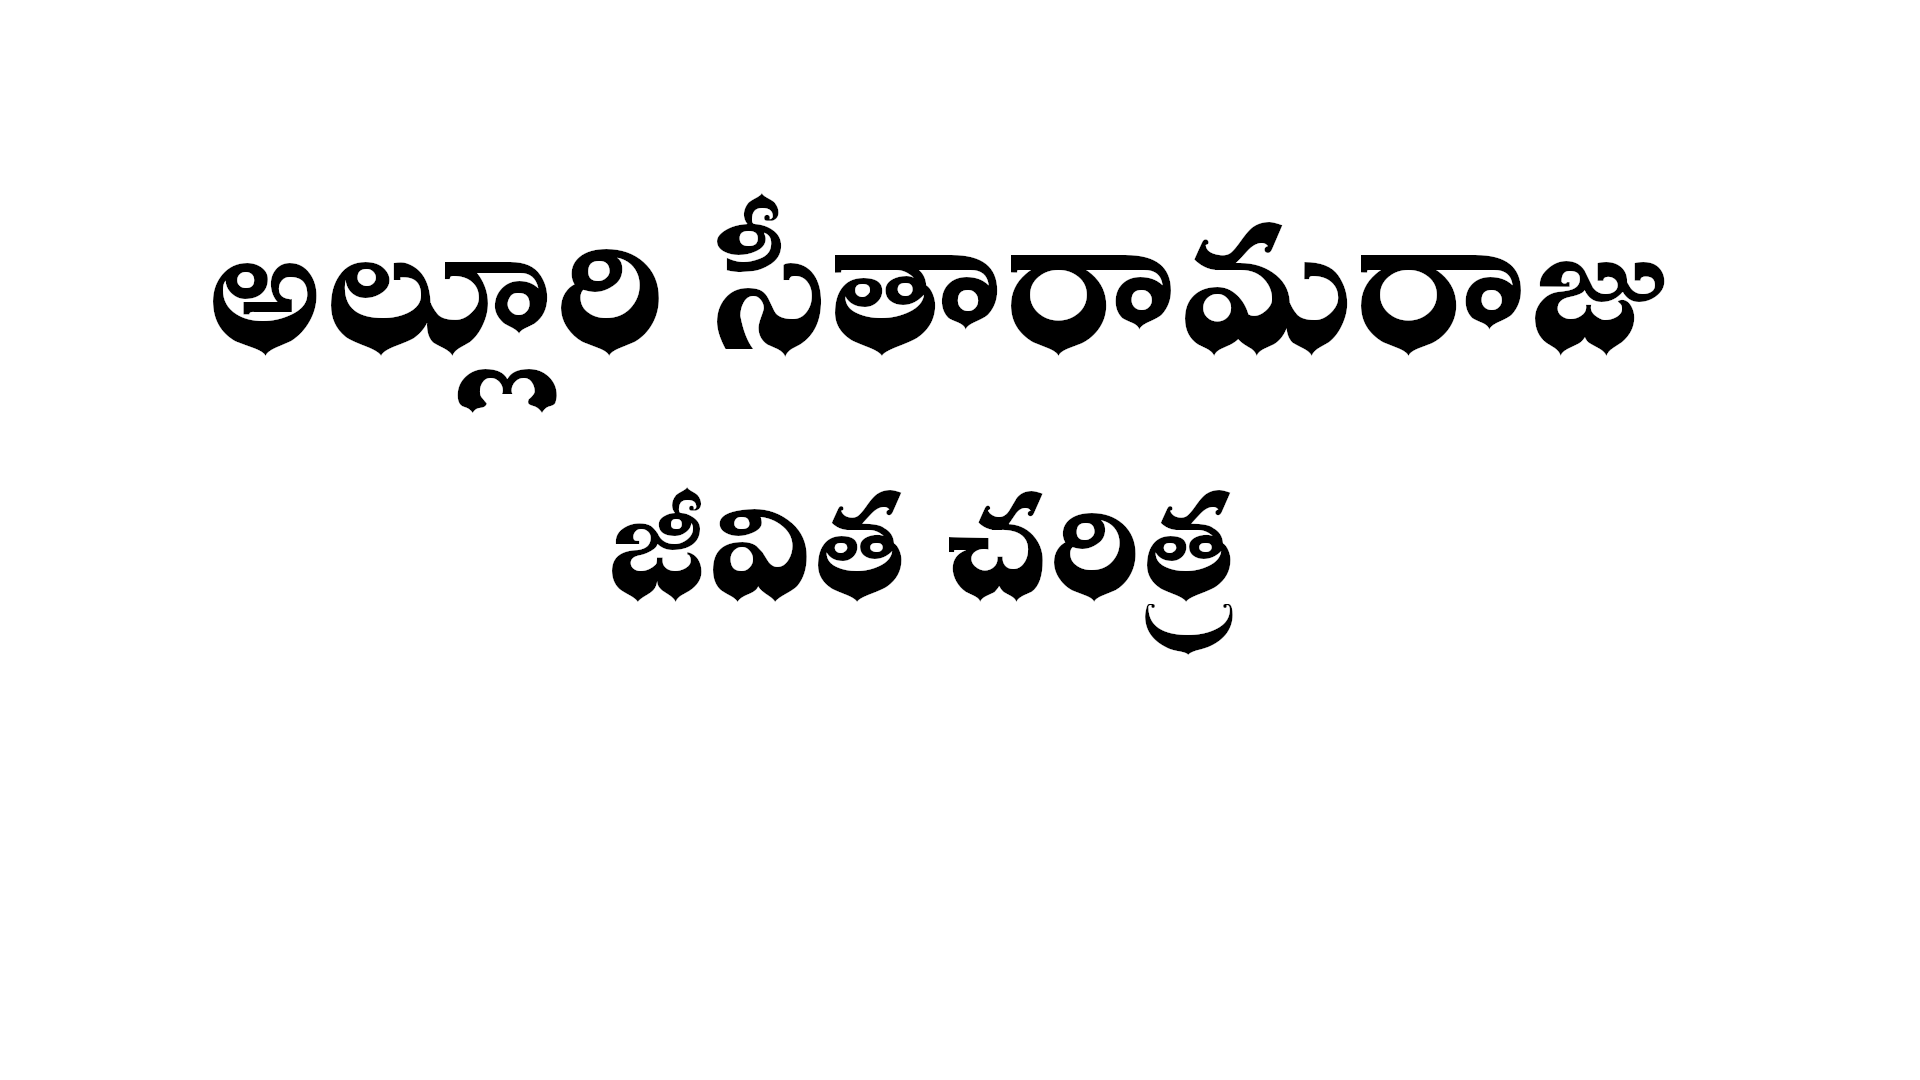 Alluri seetaramaraju biography in Telugu